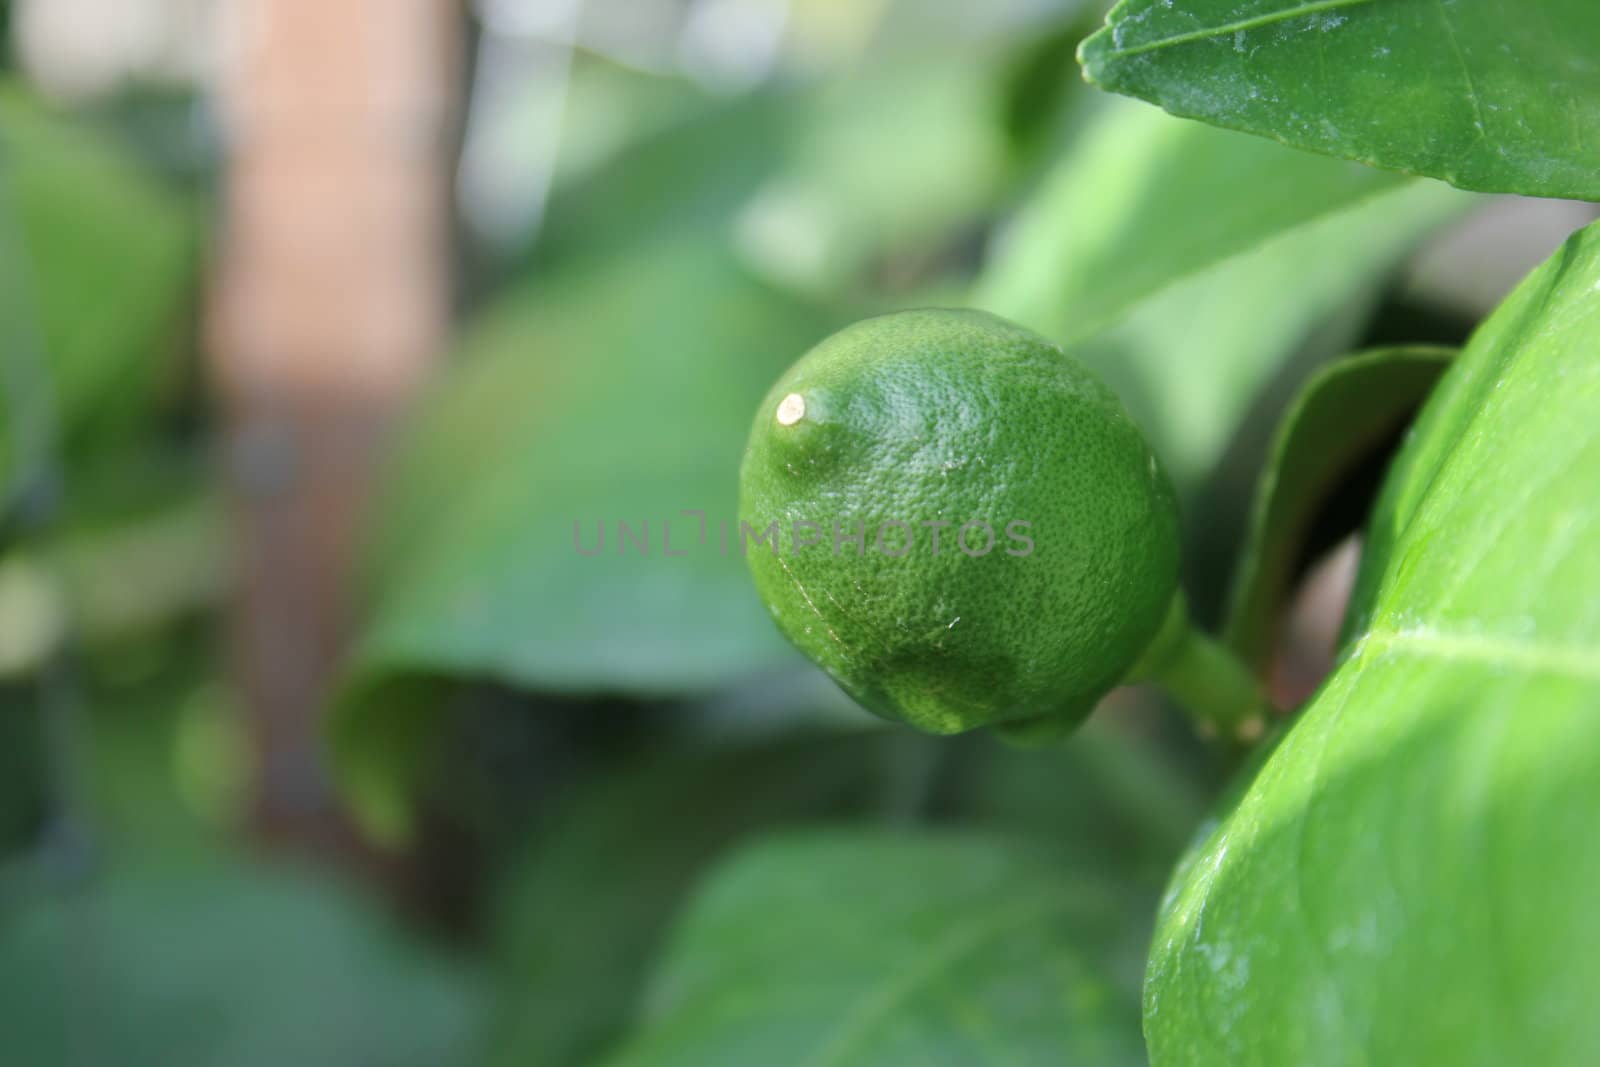 Green Lemon growing on citrus tree.